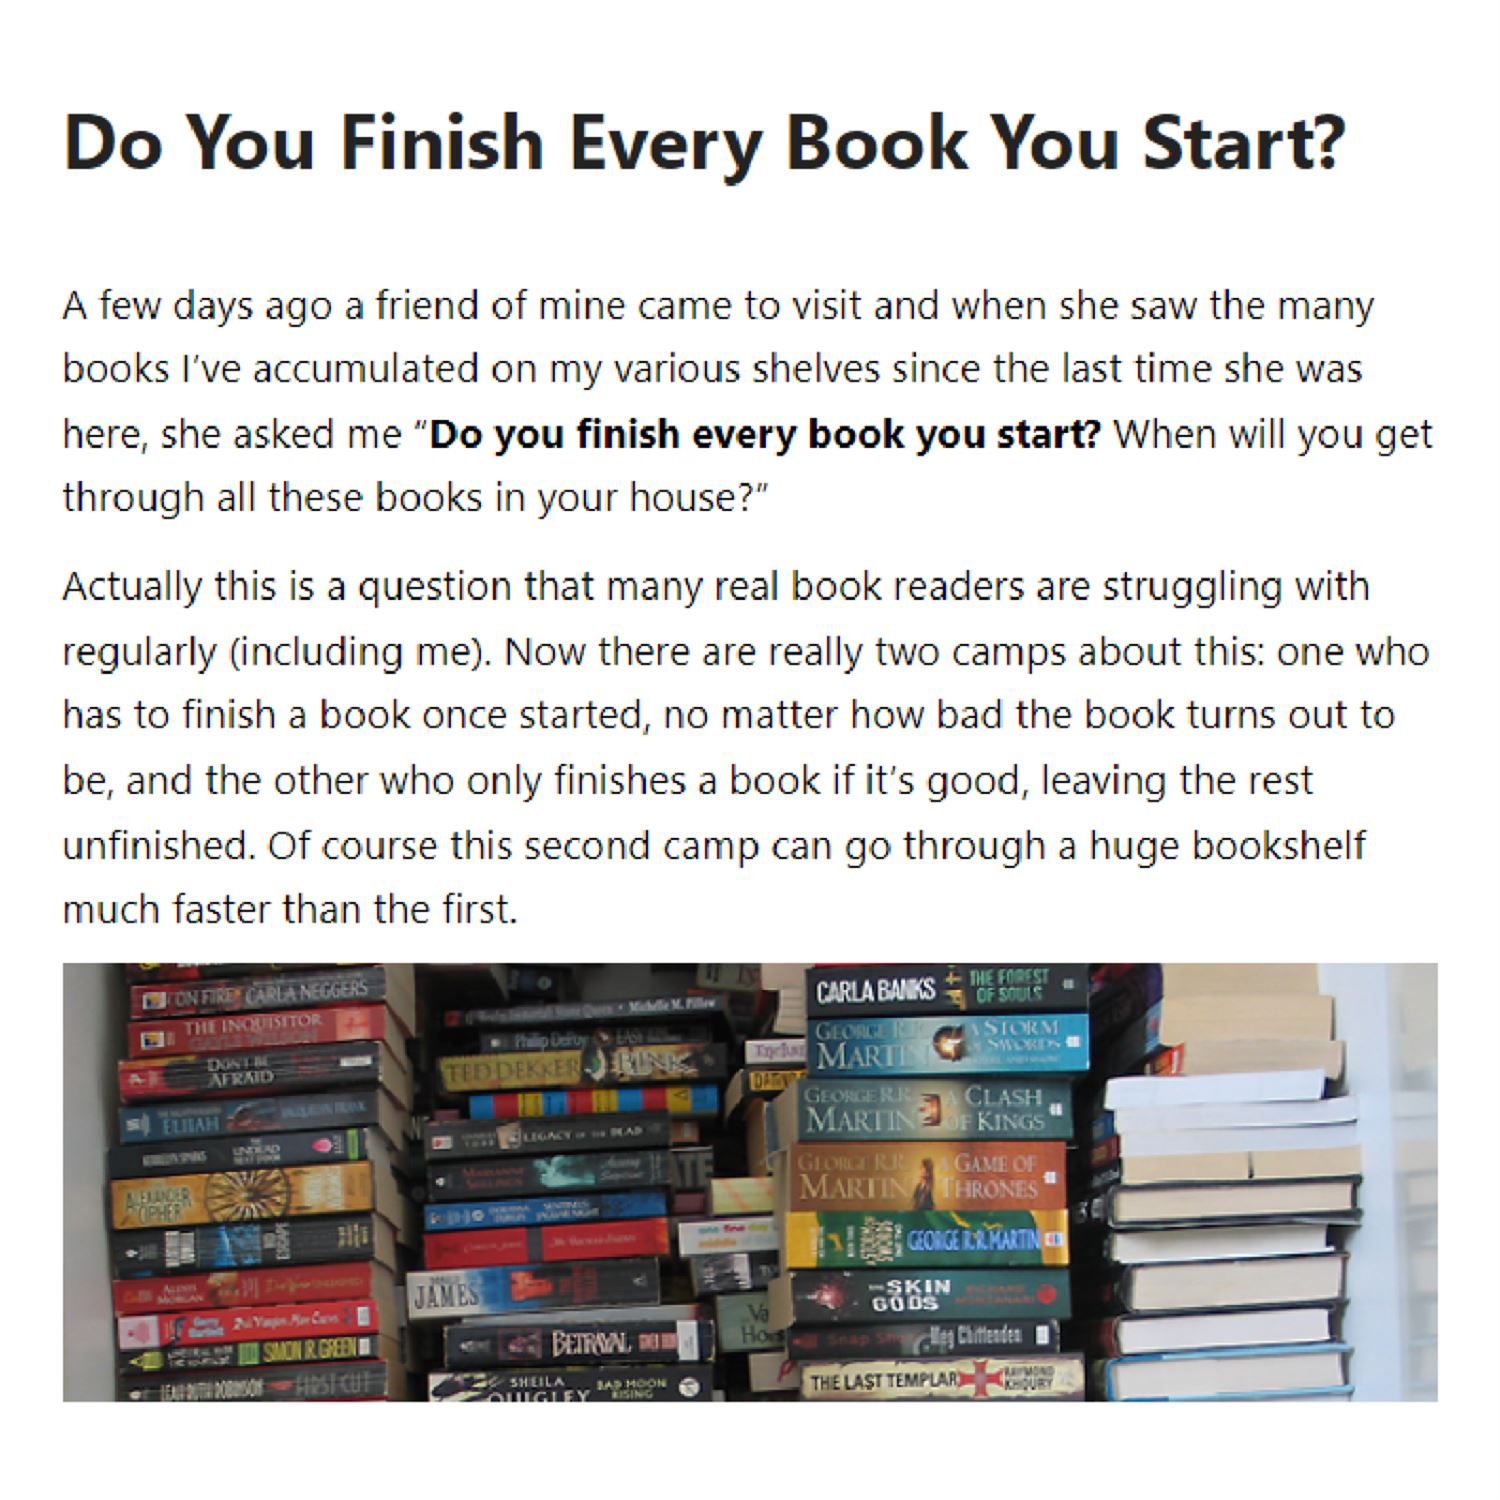 Finishing every book you start